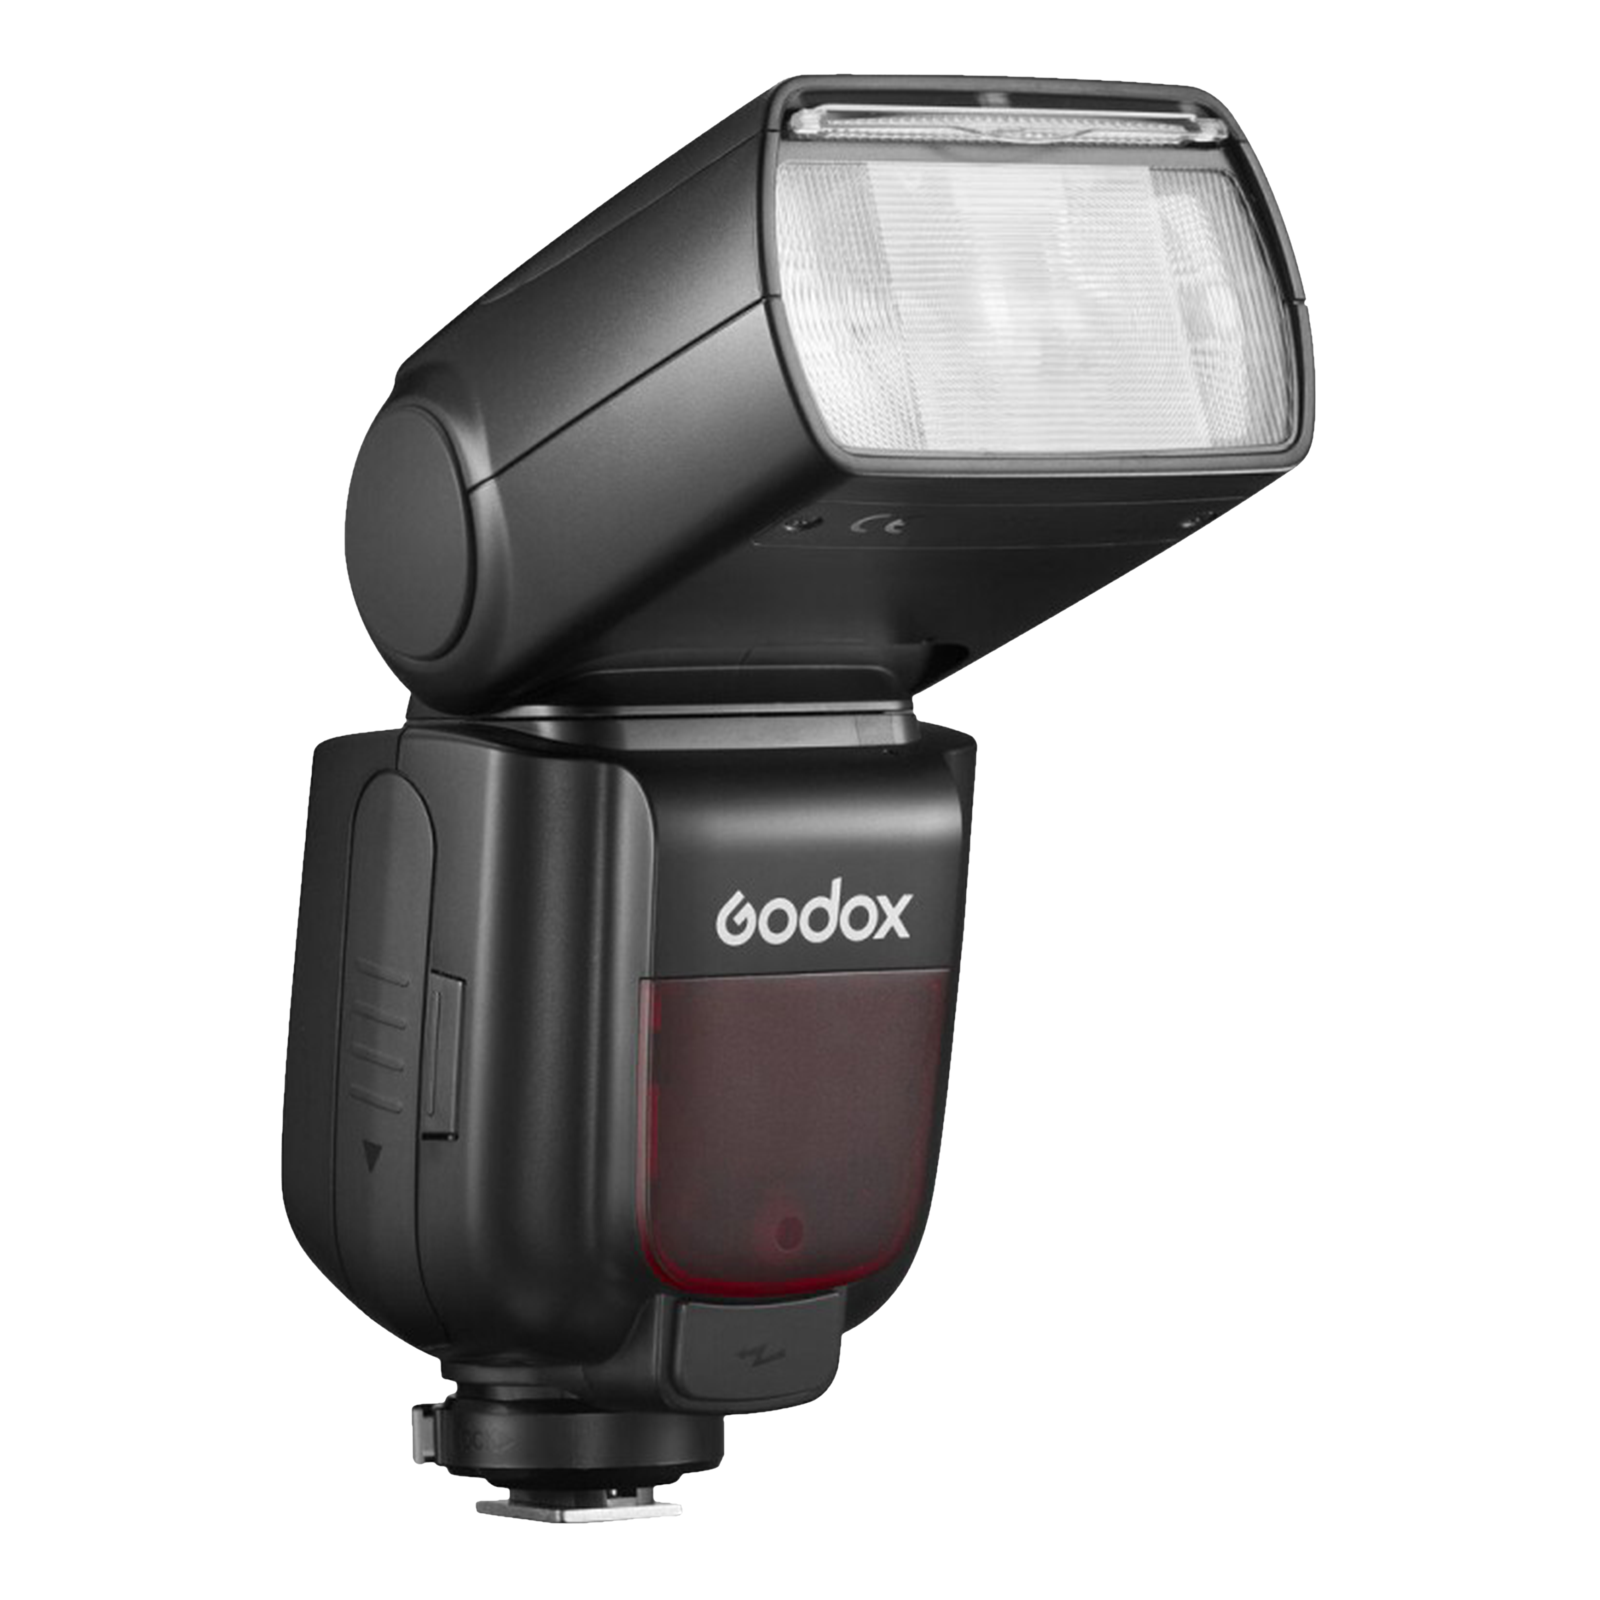 Godox TT685IIS Flash Speedlite for Sony Digital a9, a7, a7II, a7III, a7RIII, a7RII, a7SII, a6000, a6300, a6500 (Wide Light Coverage)